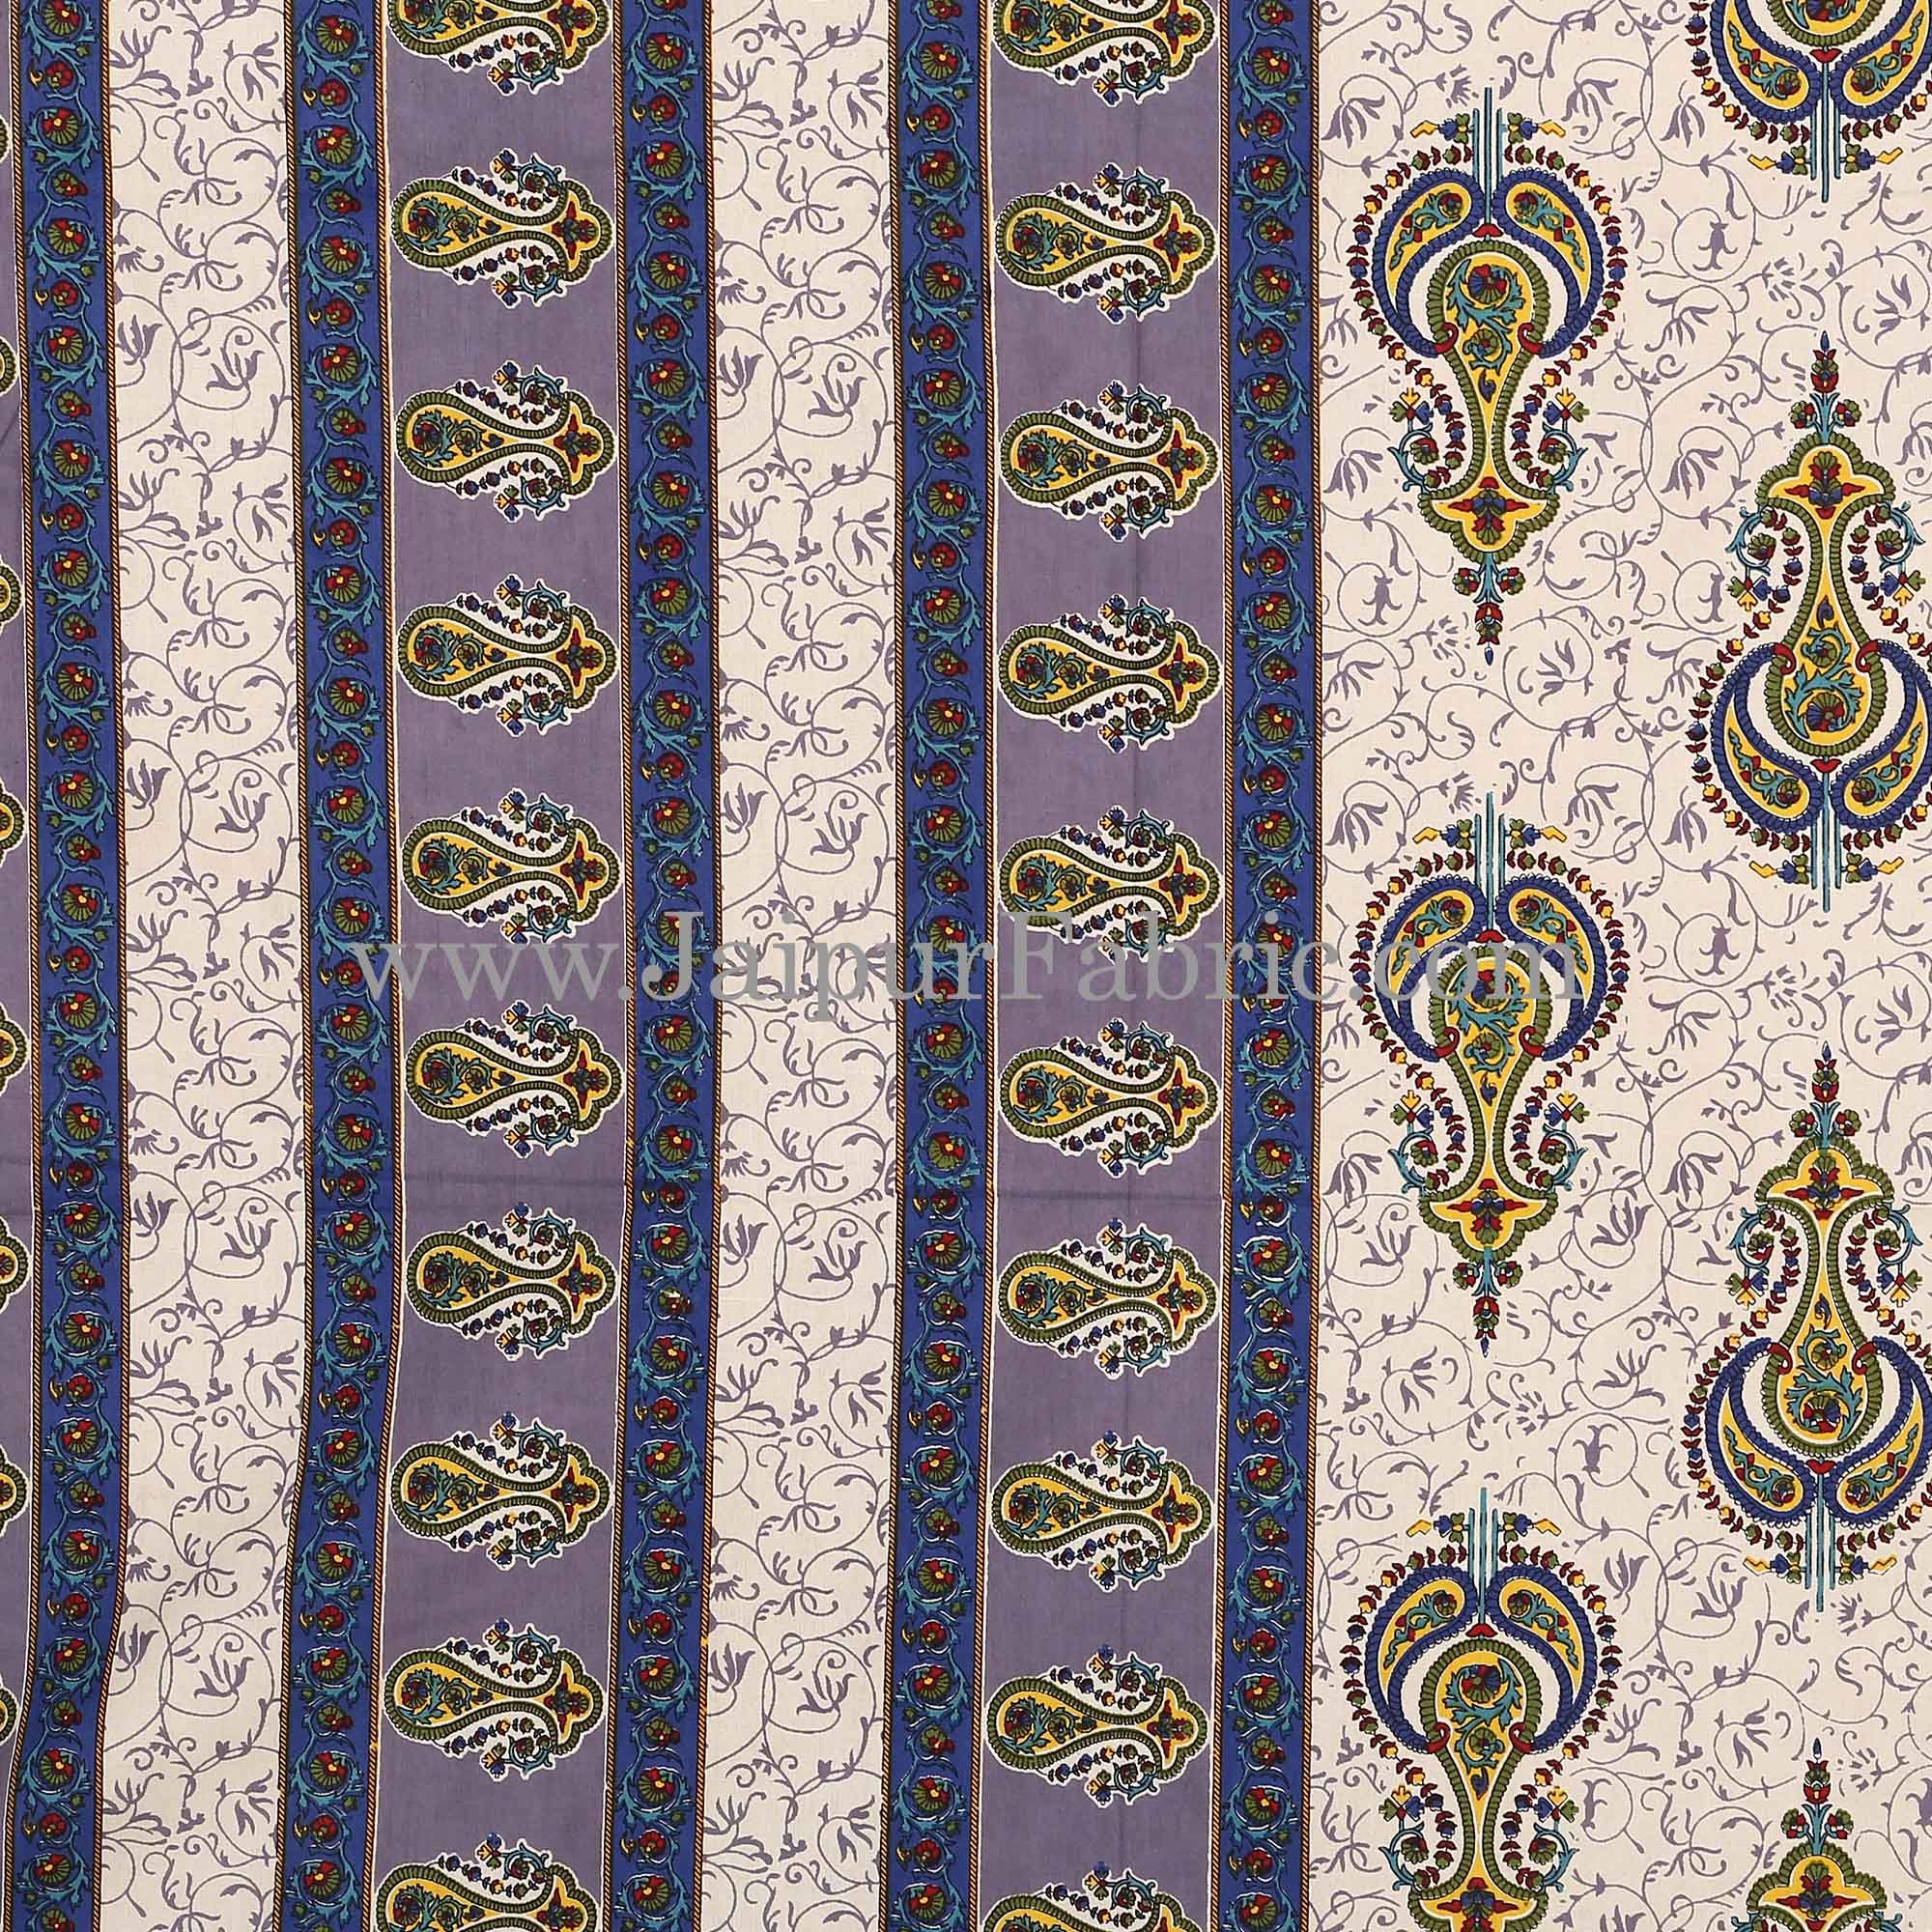 Blue Border Creame Base Sanganeri Print Super Fine Cotton Double Bedsheet